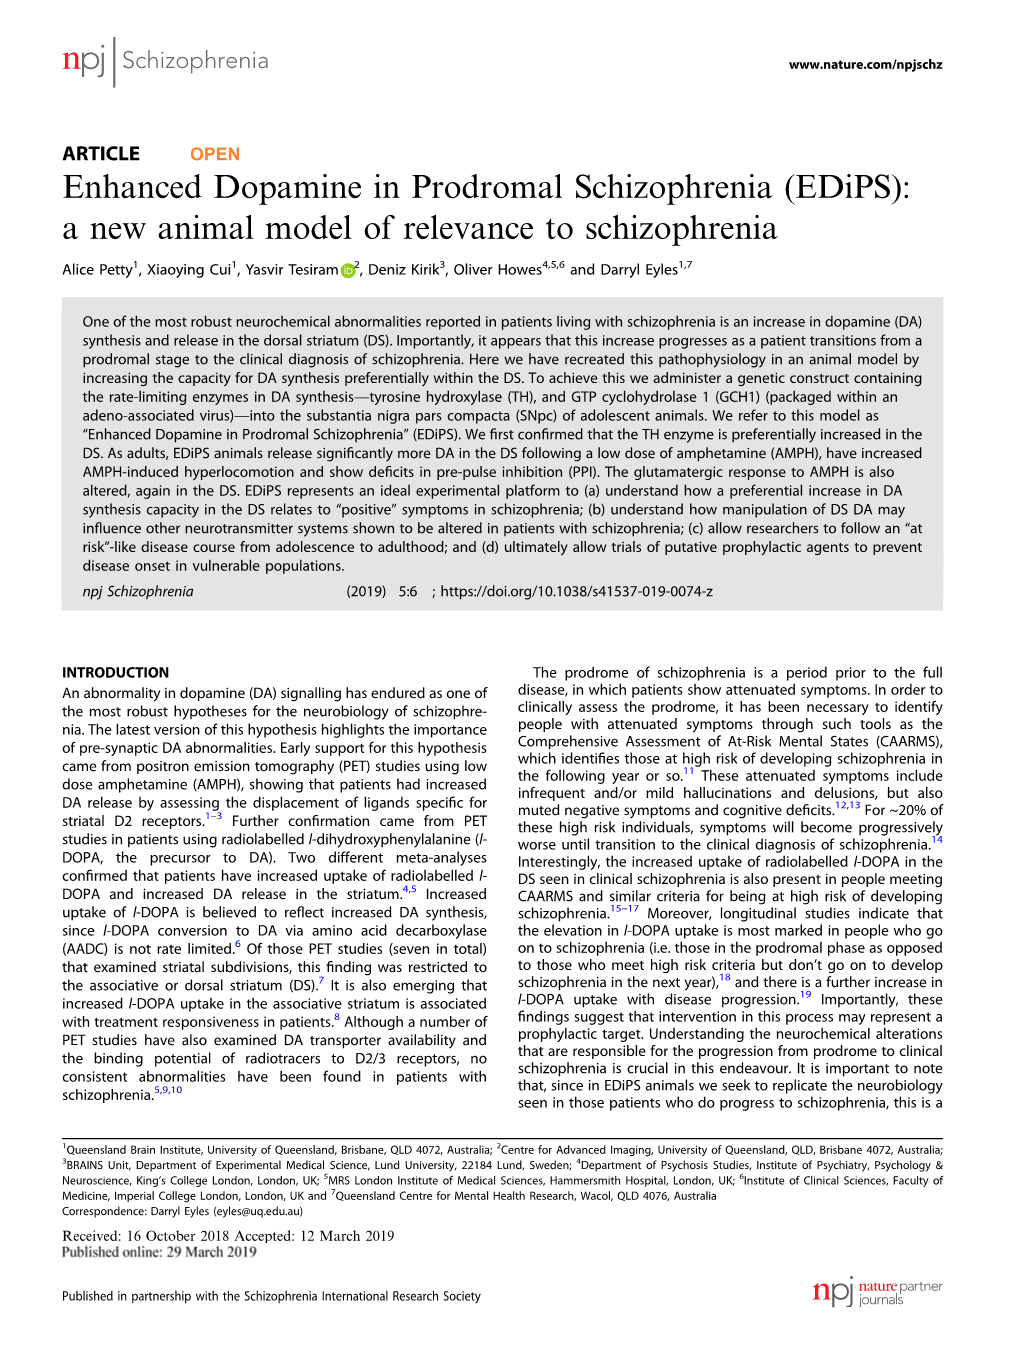 Enhanced Dopamine in Prodromal Schizophrenia (Edips): a New Animal Model of Relevance to Schizophrenia